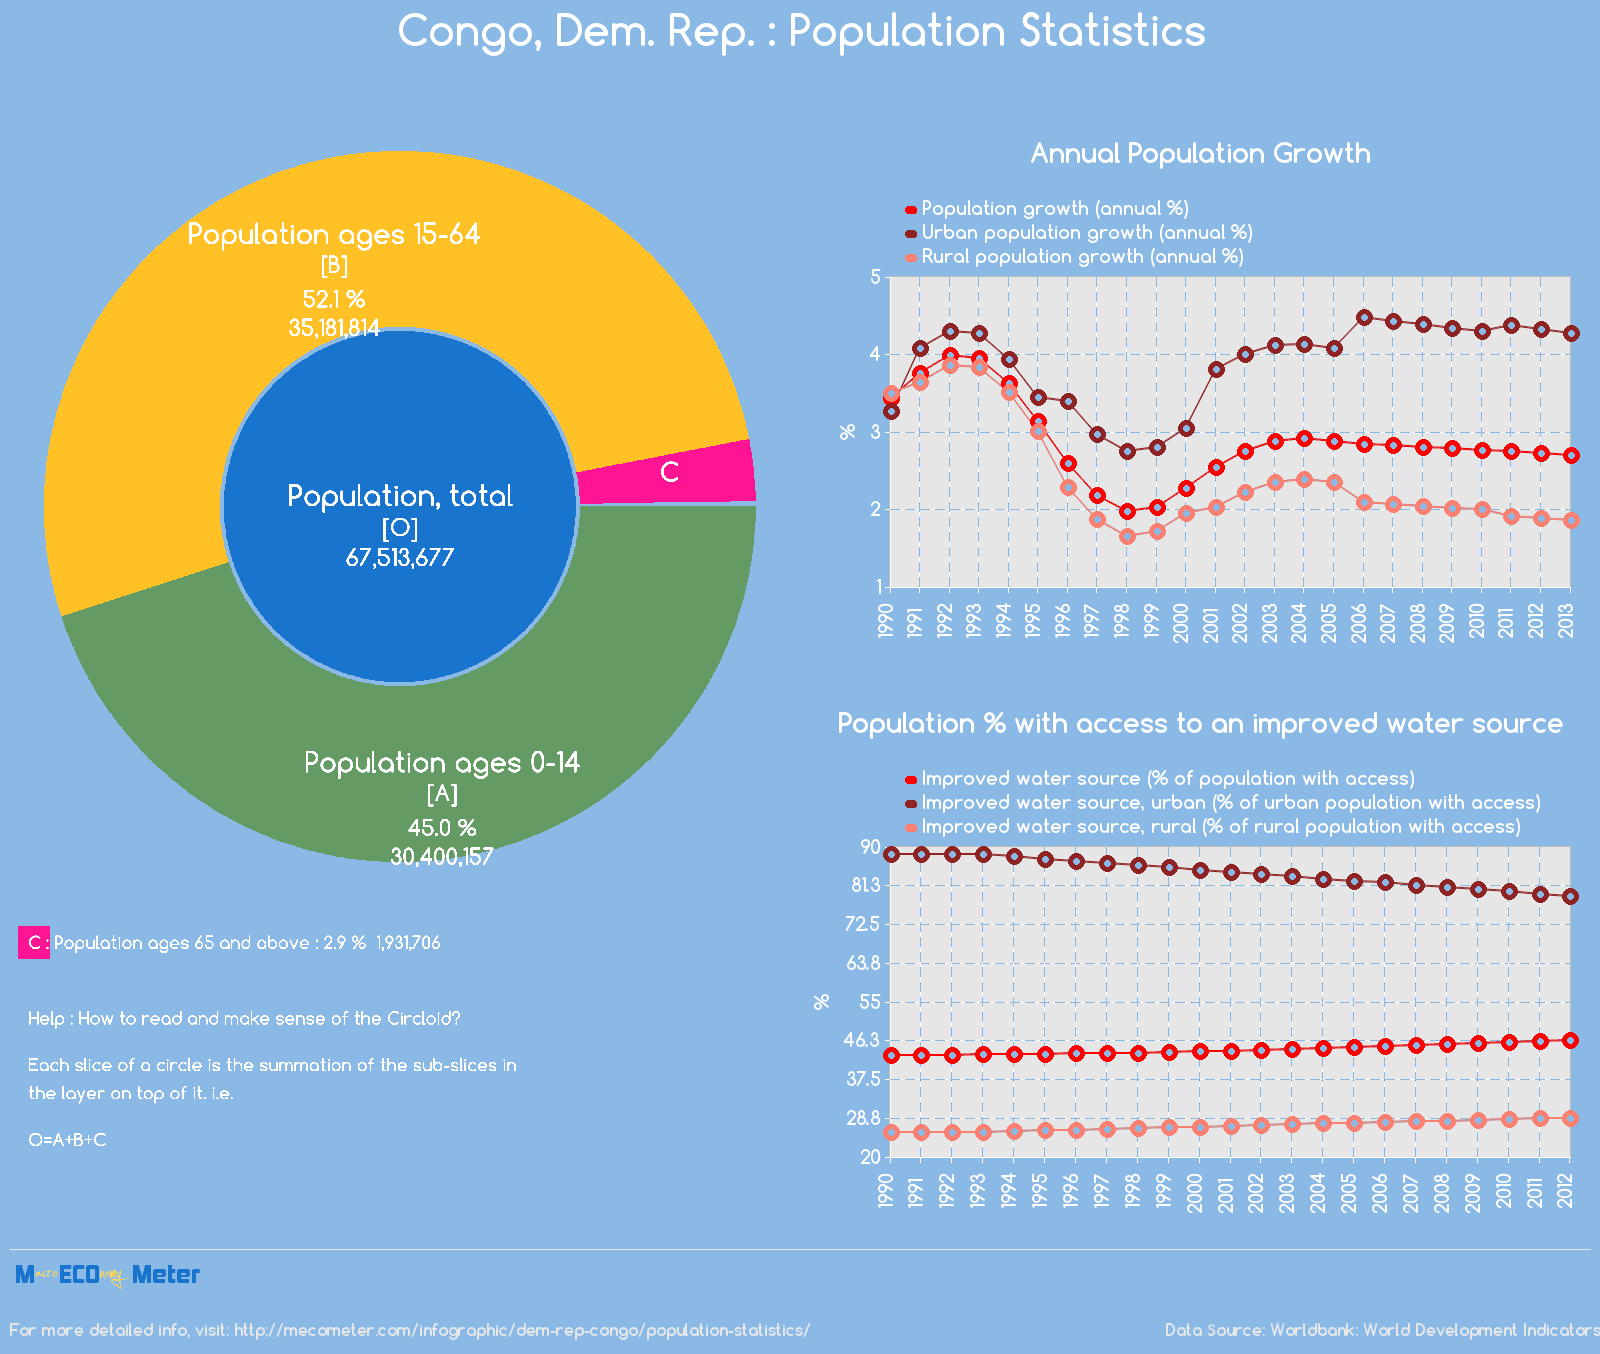 Congo, Dem. Rep. : Population Statistics